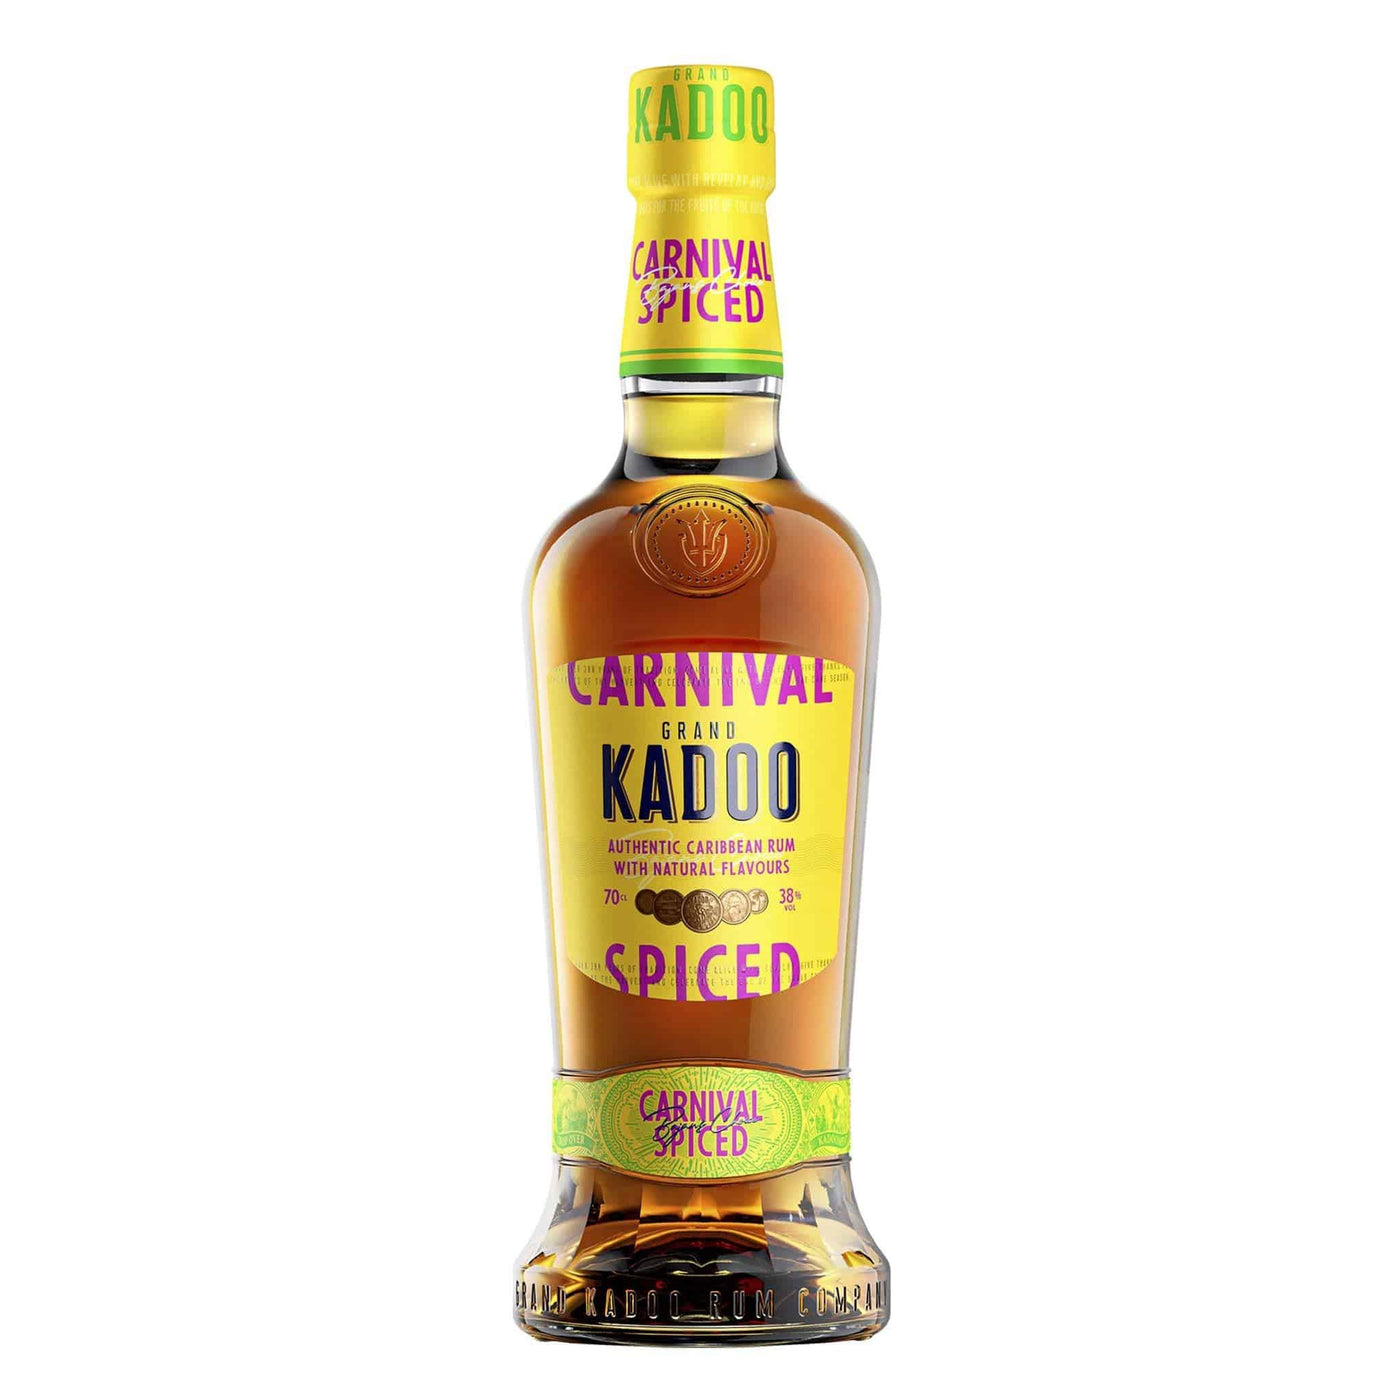 Kadoo Carnival Spiced Rum